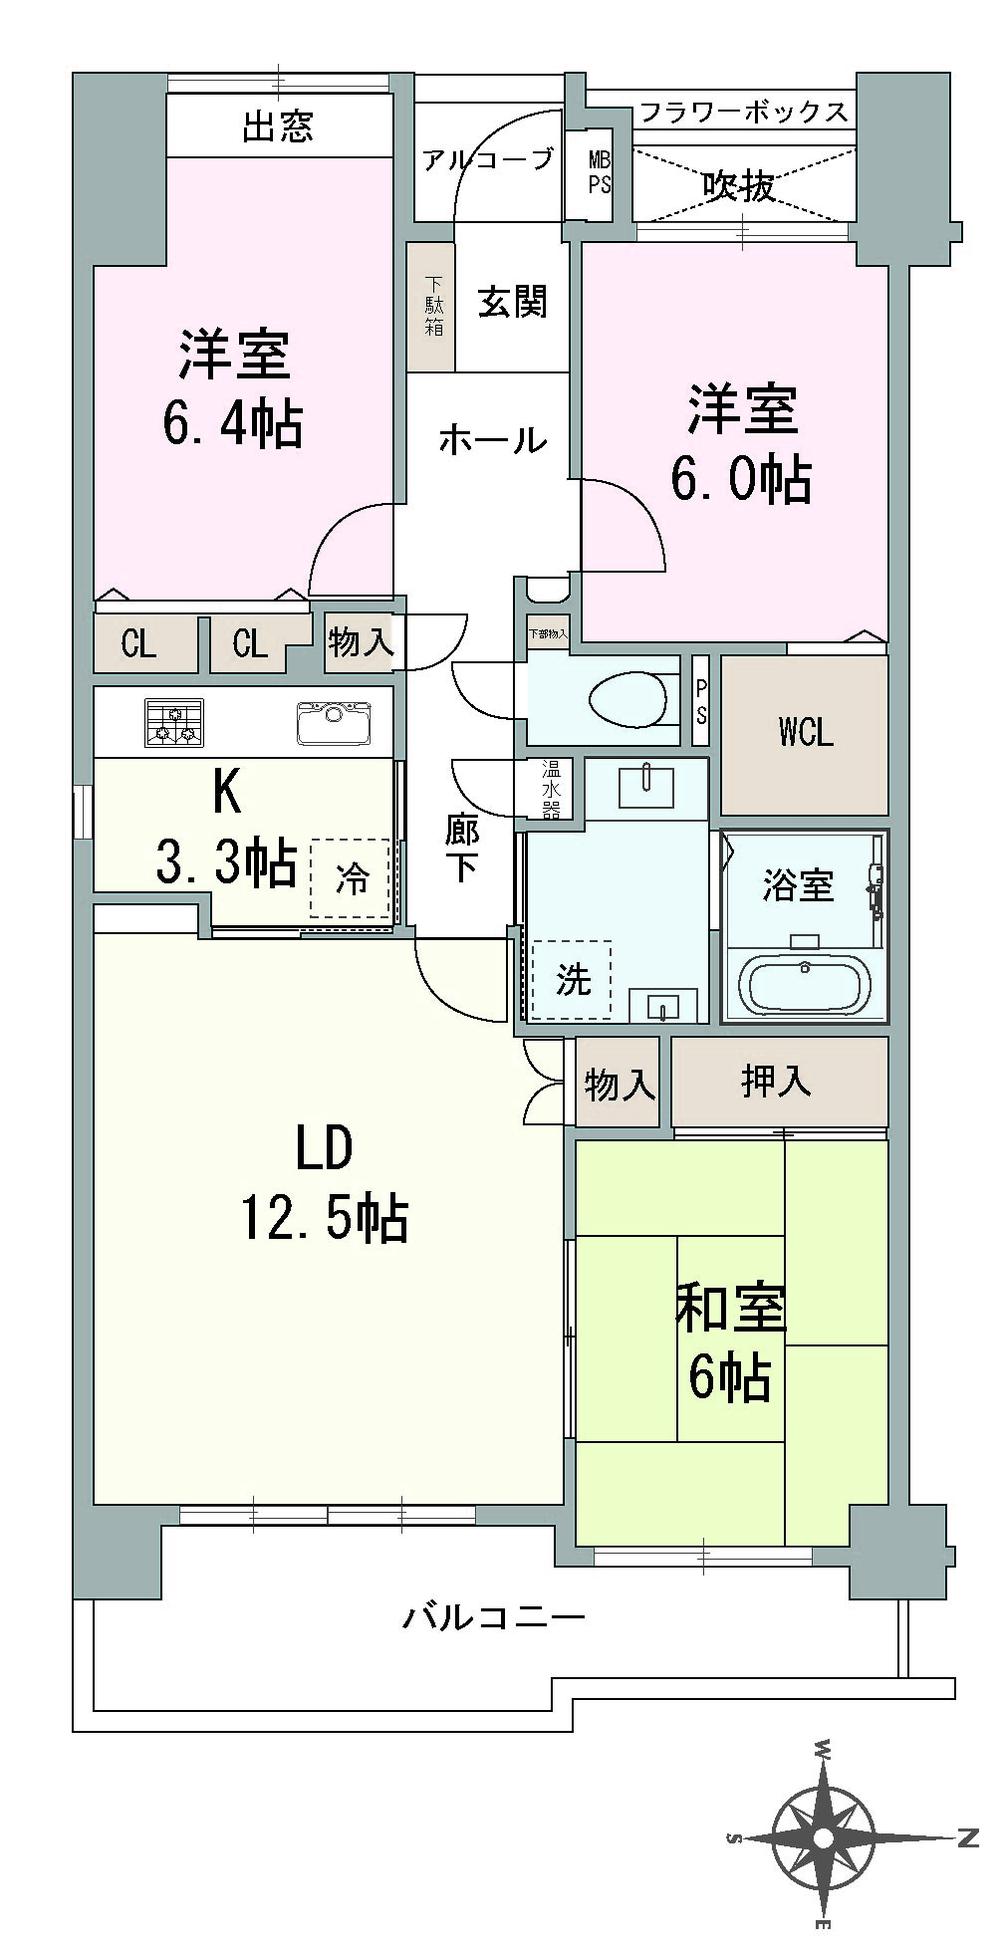 Floor plan. 3LDK, Price 11.5 million yen, Occupied area 79.84 sq m , Balcony area 10.28 sq m